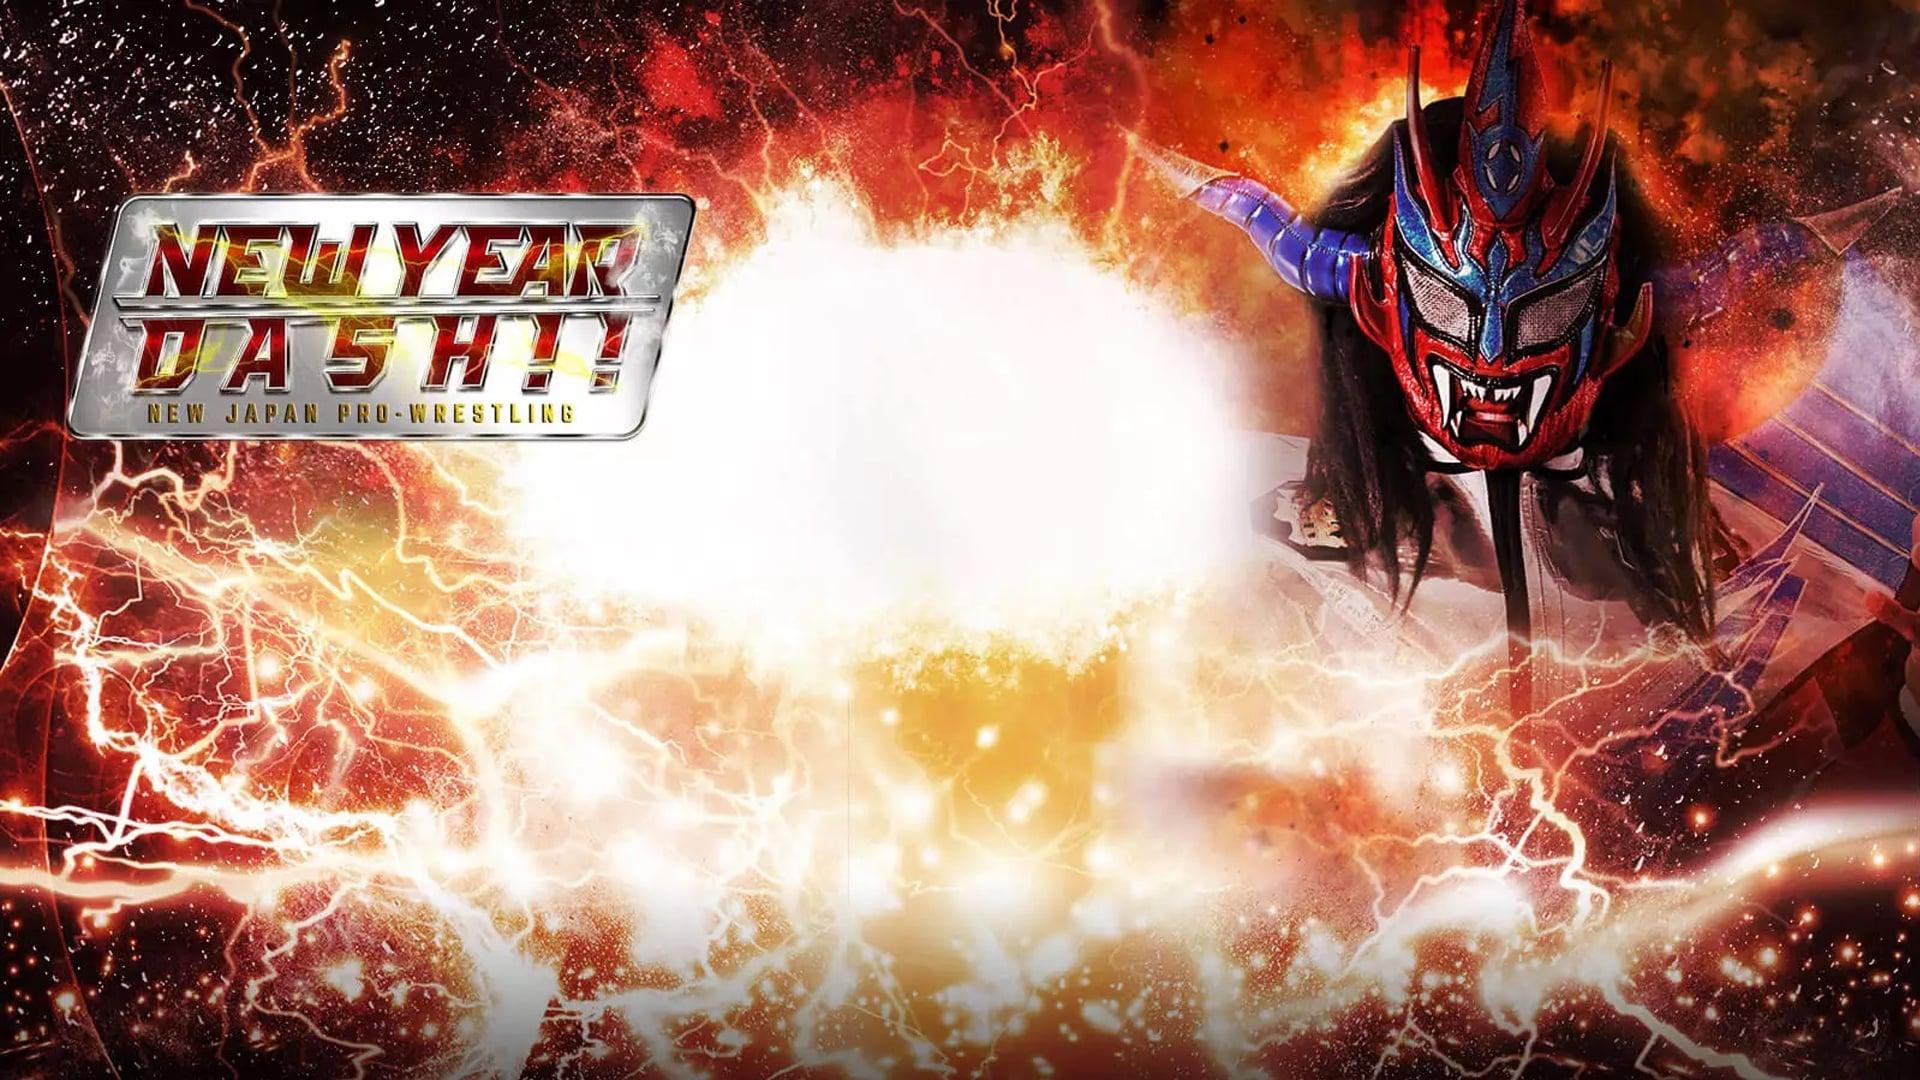 NJPW New Year Dash !! 2019 backdrop